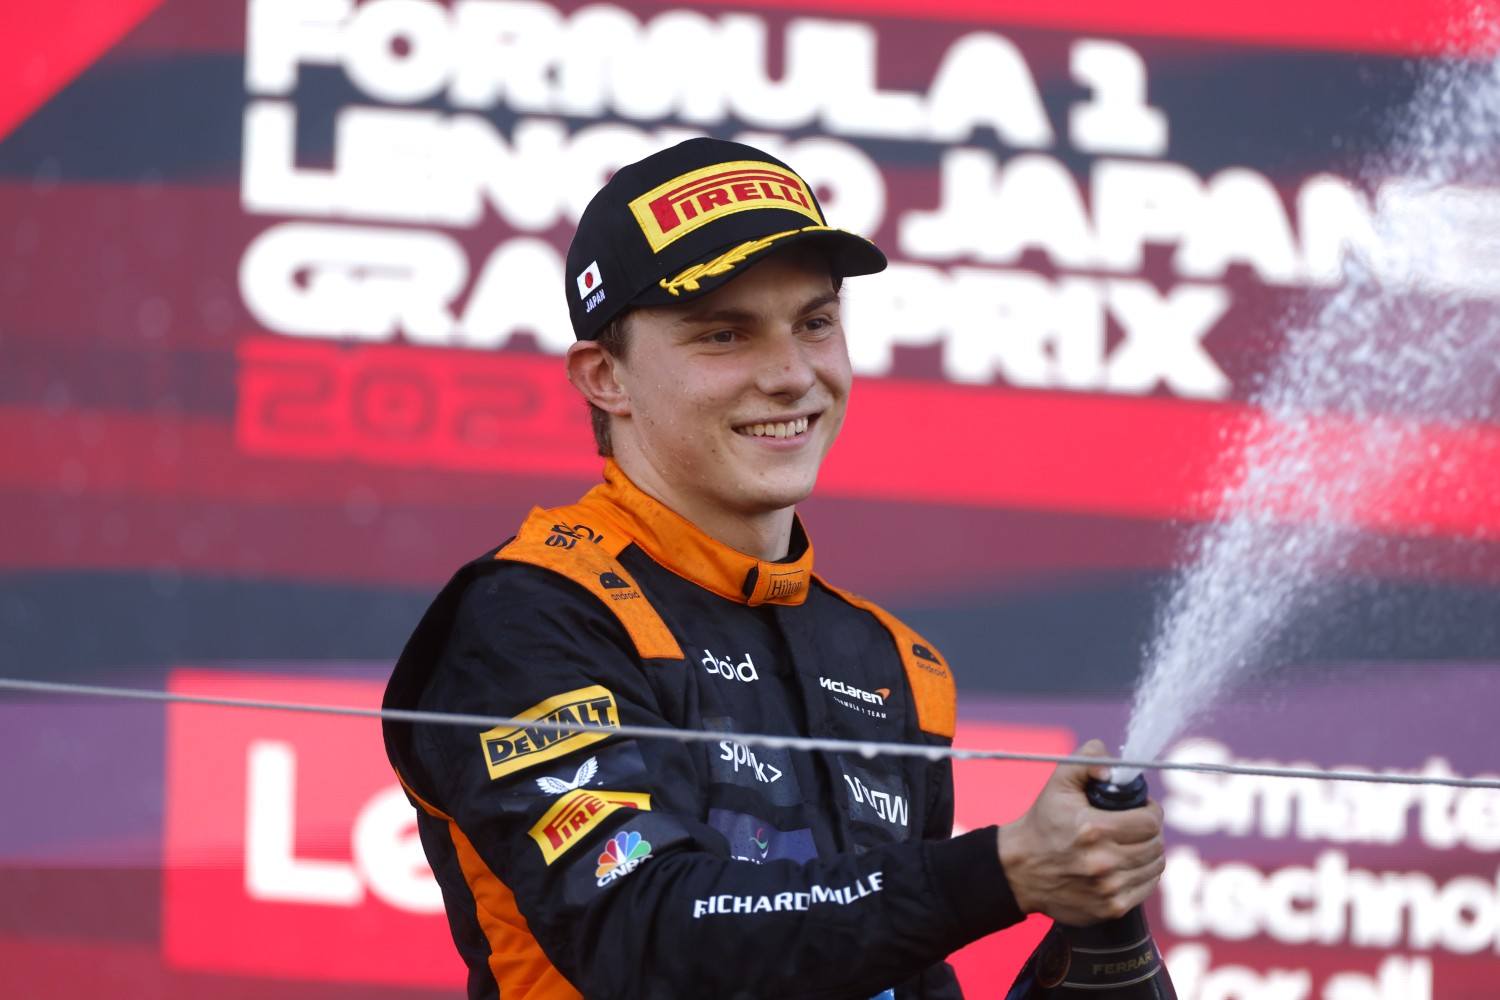 Oscar Piastri, McLaren, 2nd position, sprays Champagne on the podium